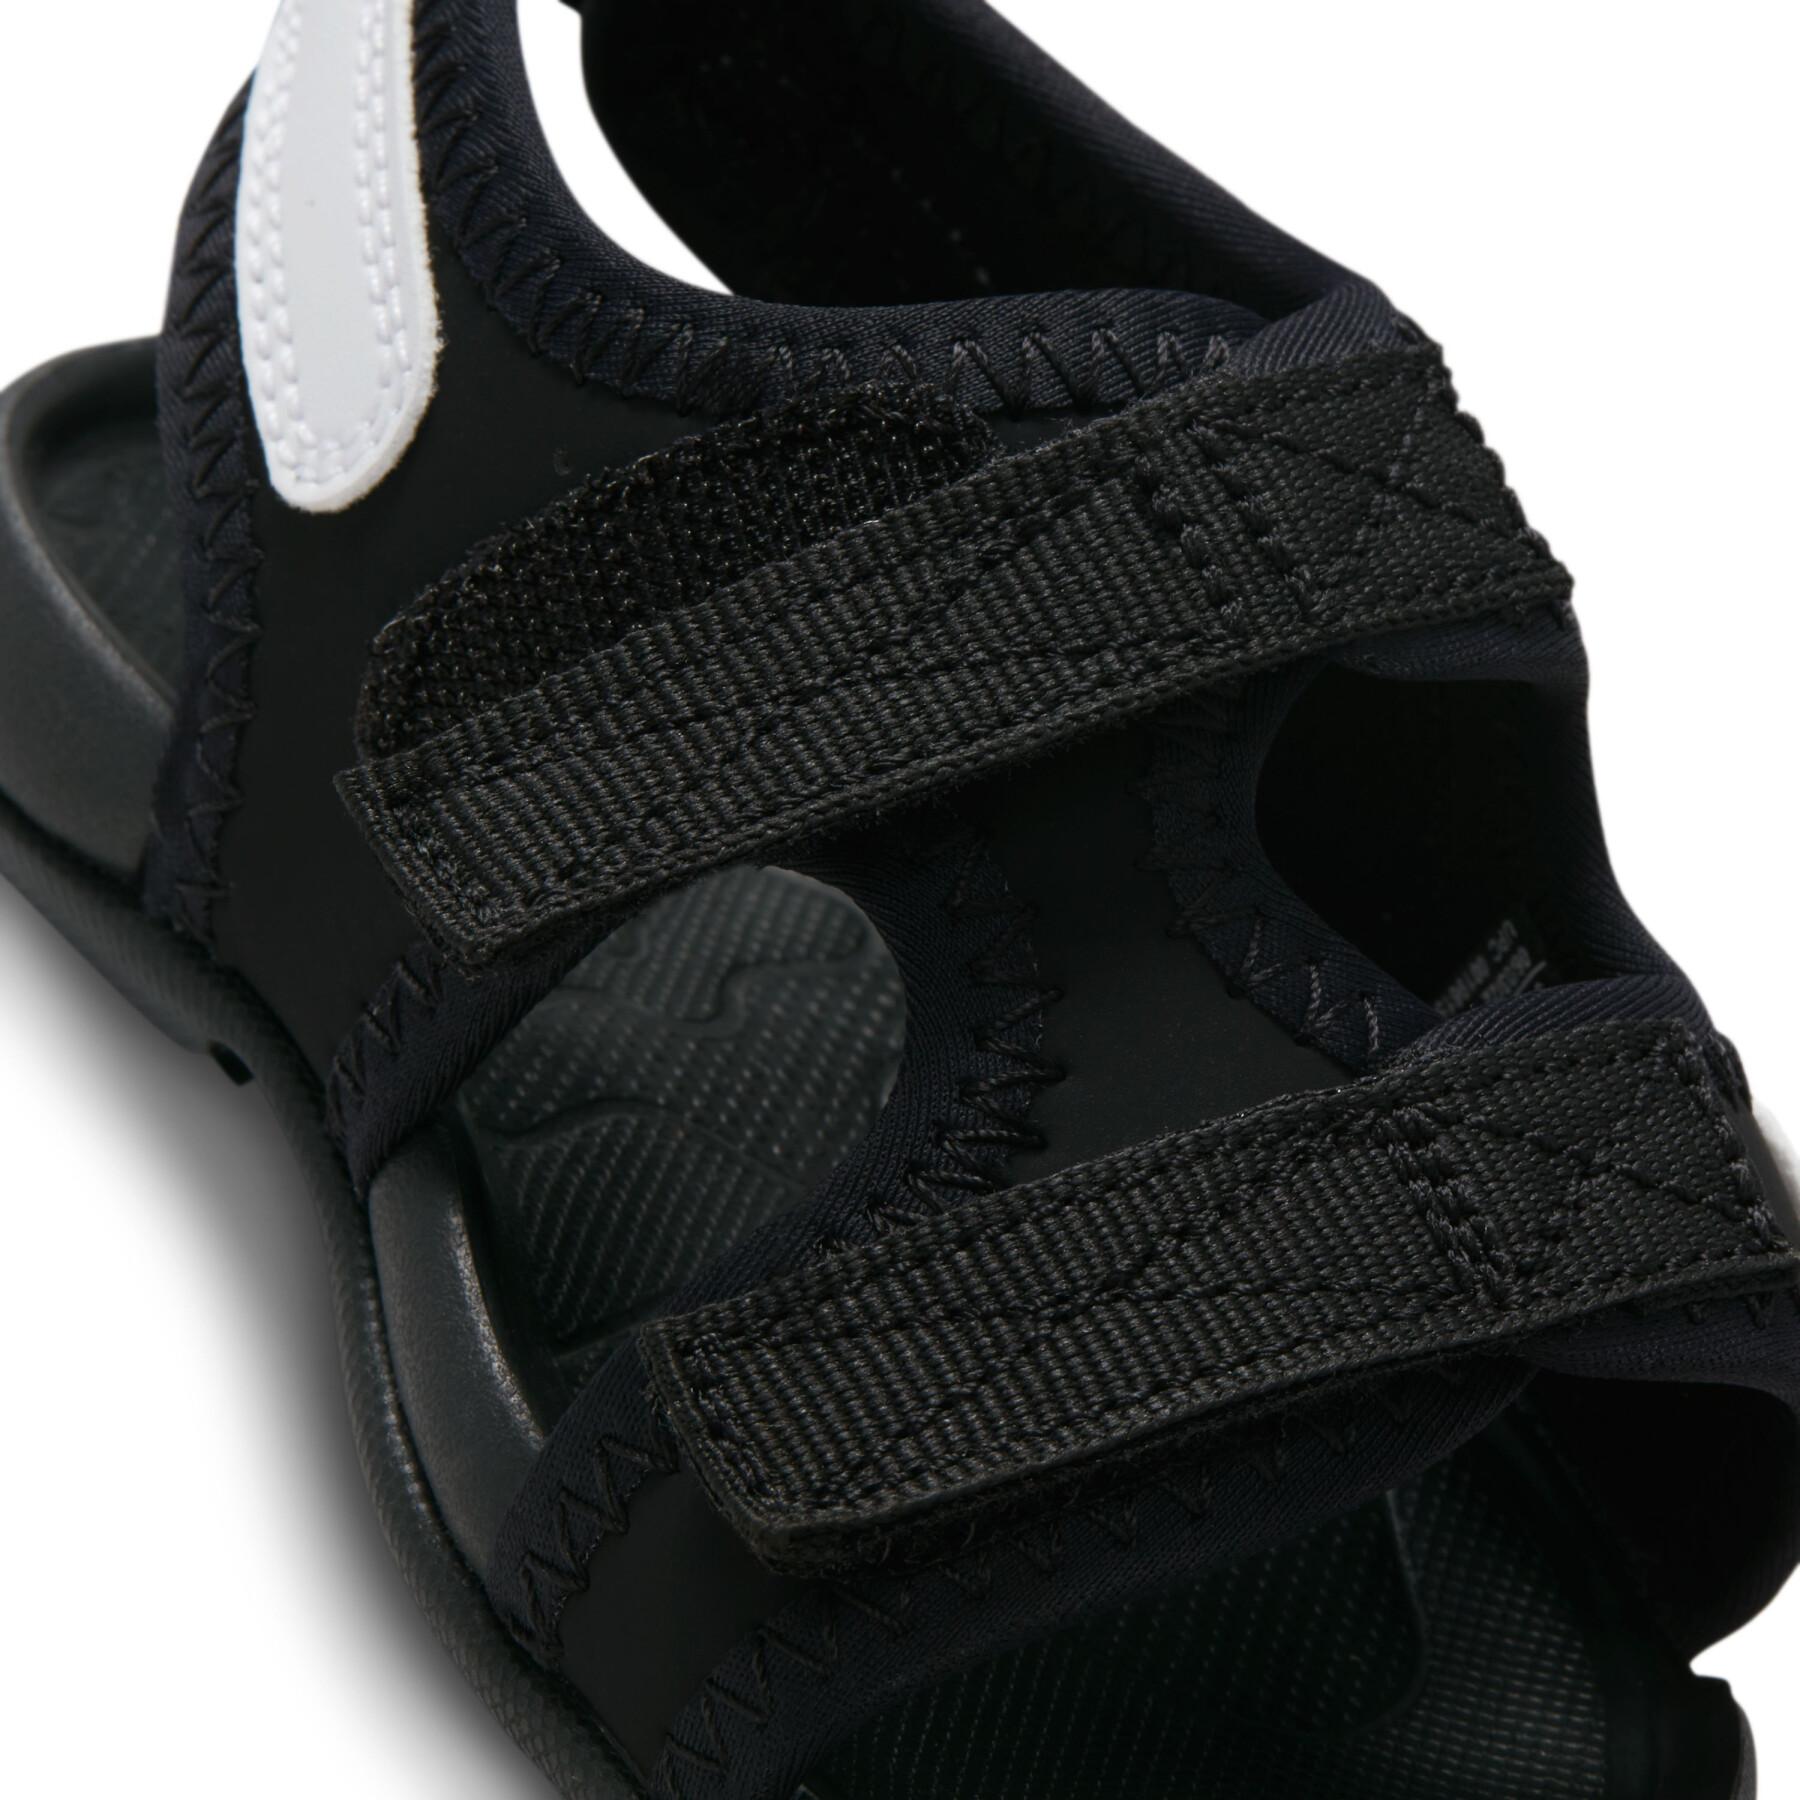 Baby boy sandals Nike Sunray Adjust 6